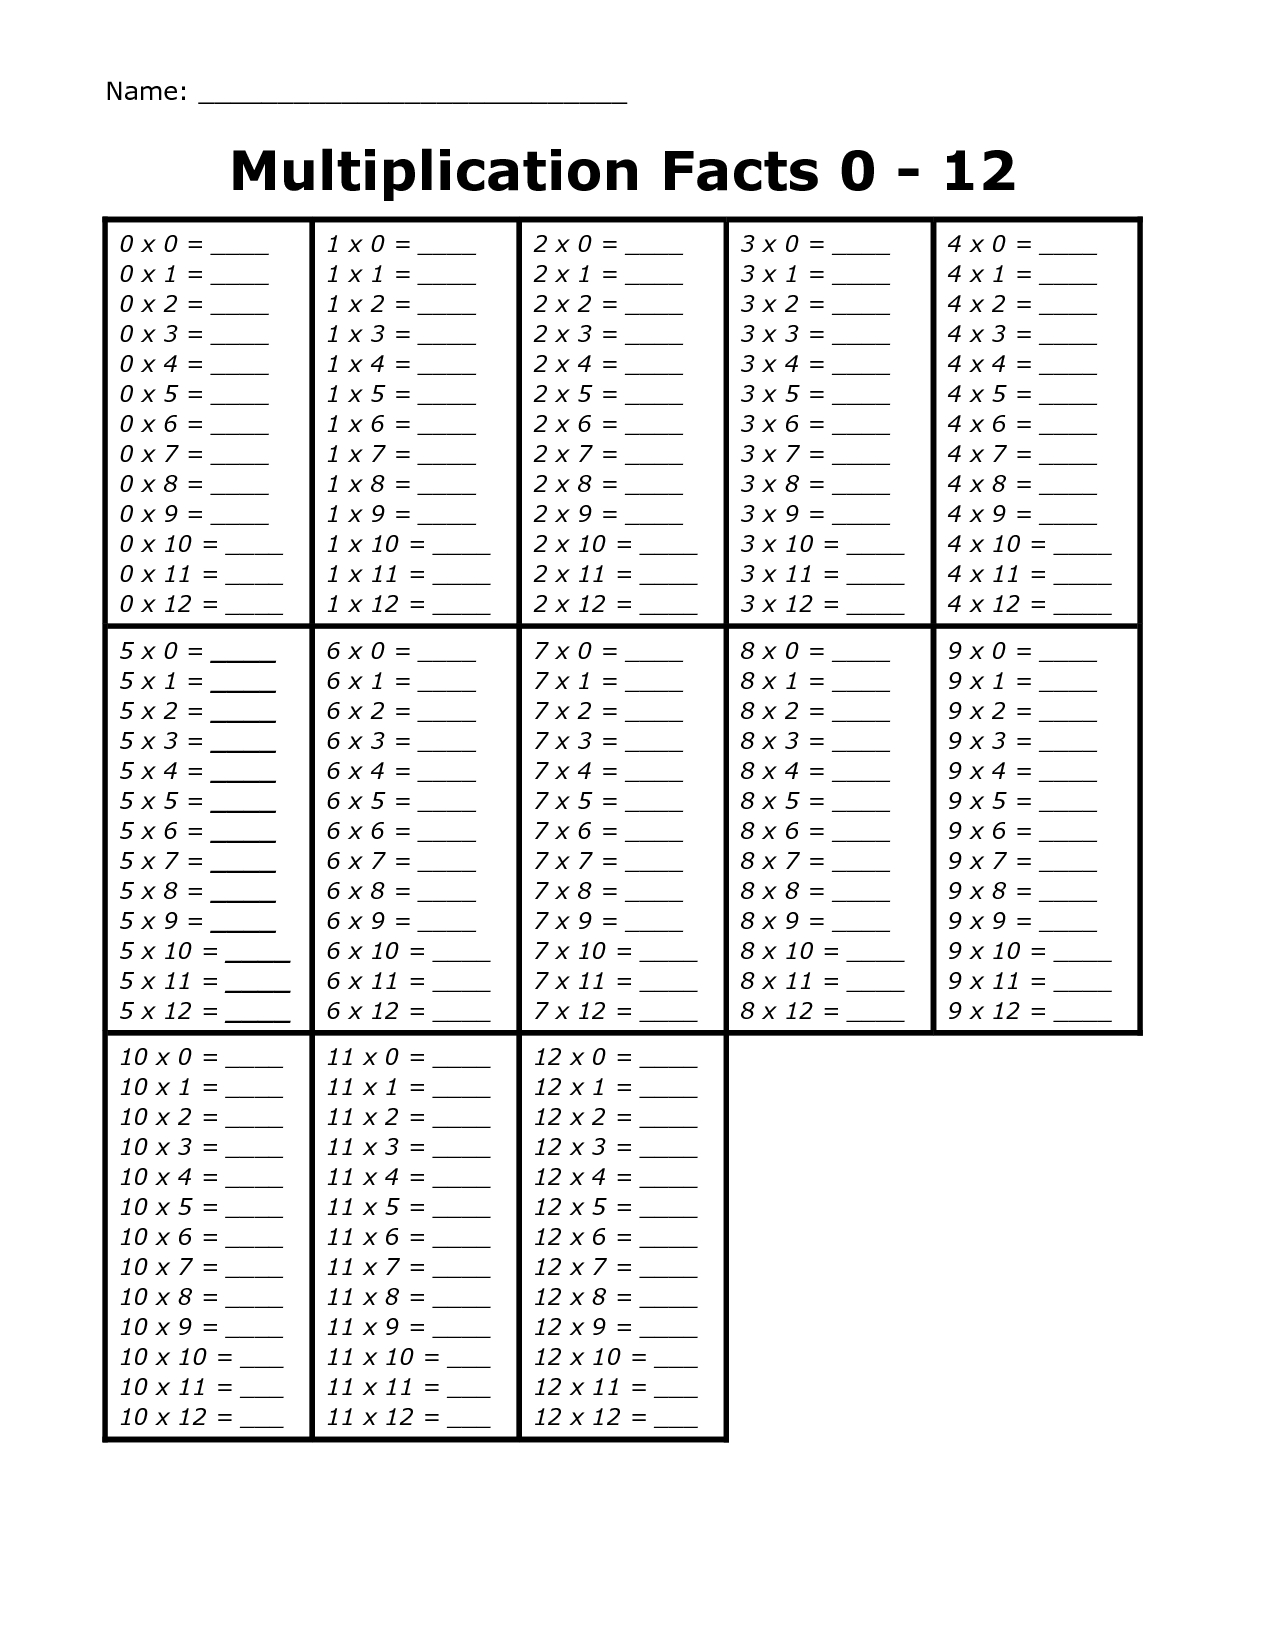 printable-empty-multiplication-table-printablemultiplication